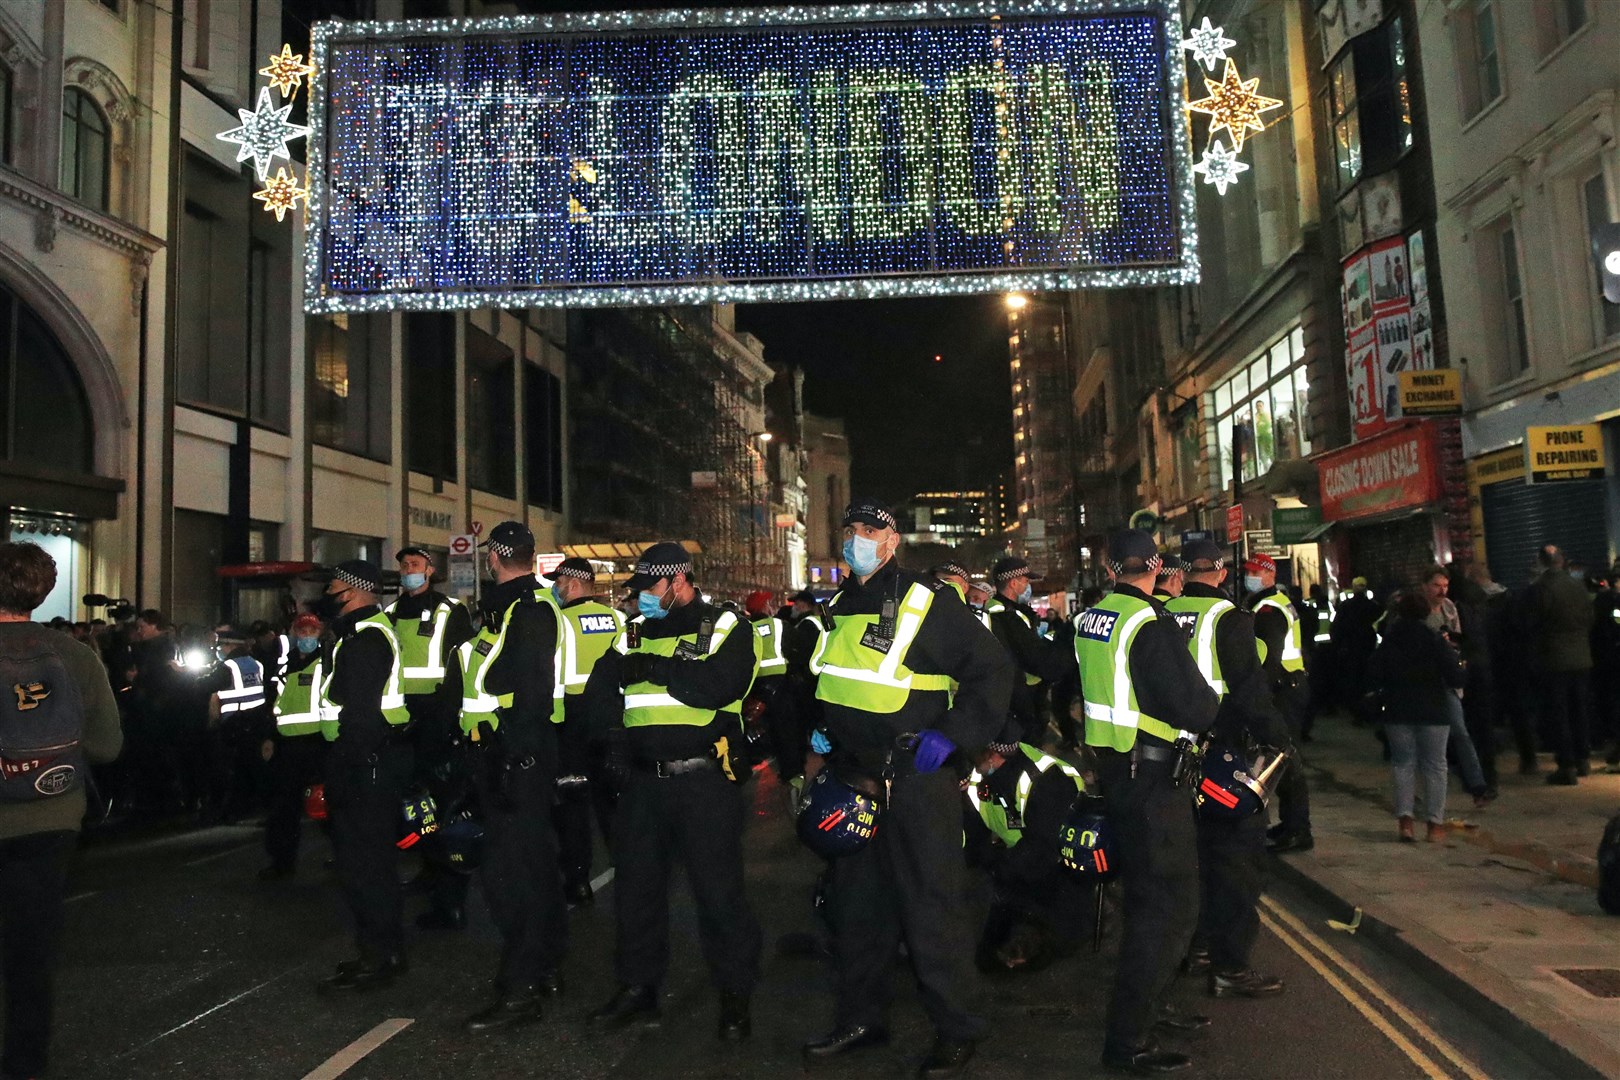 Police arrest 190 protesters in London anti-lockdown march